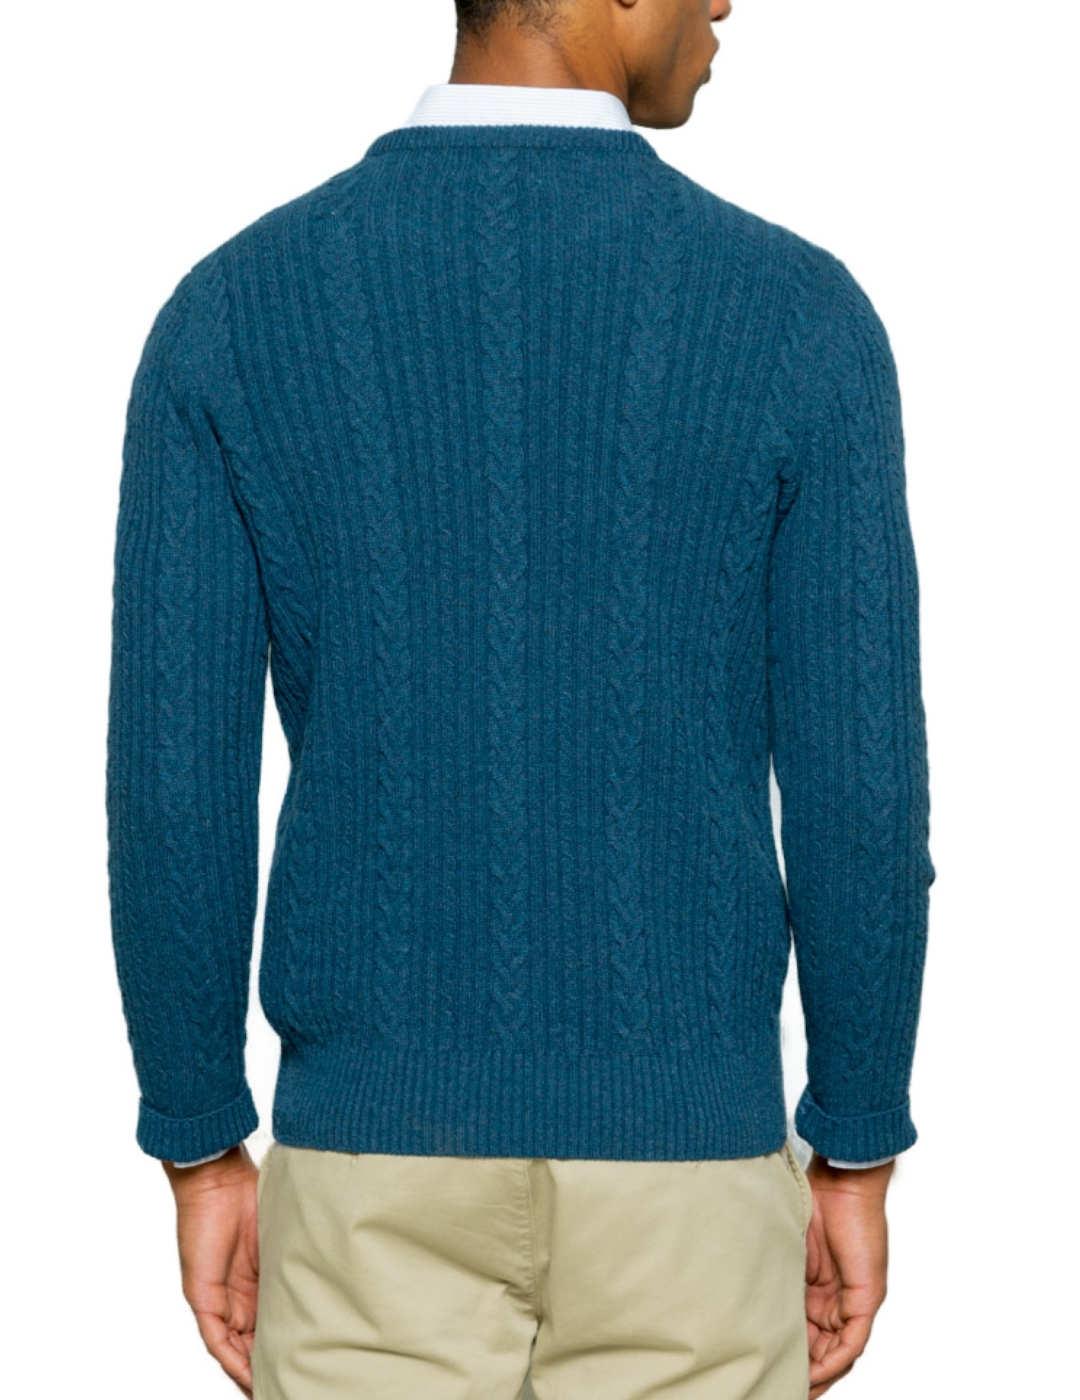 Jersey Scotta ochos azul verdoso de lana para hombre